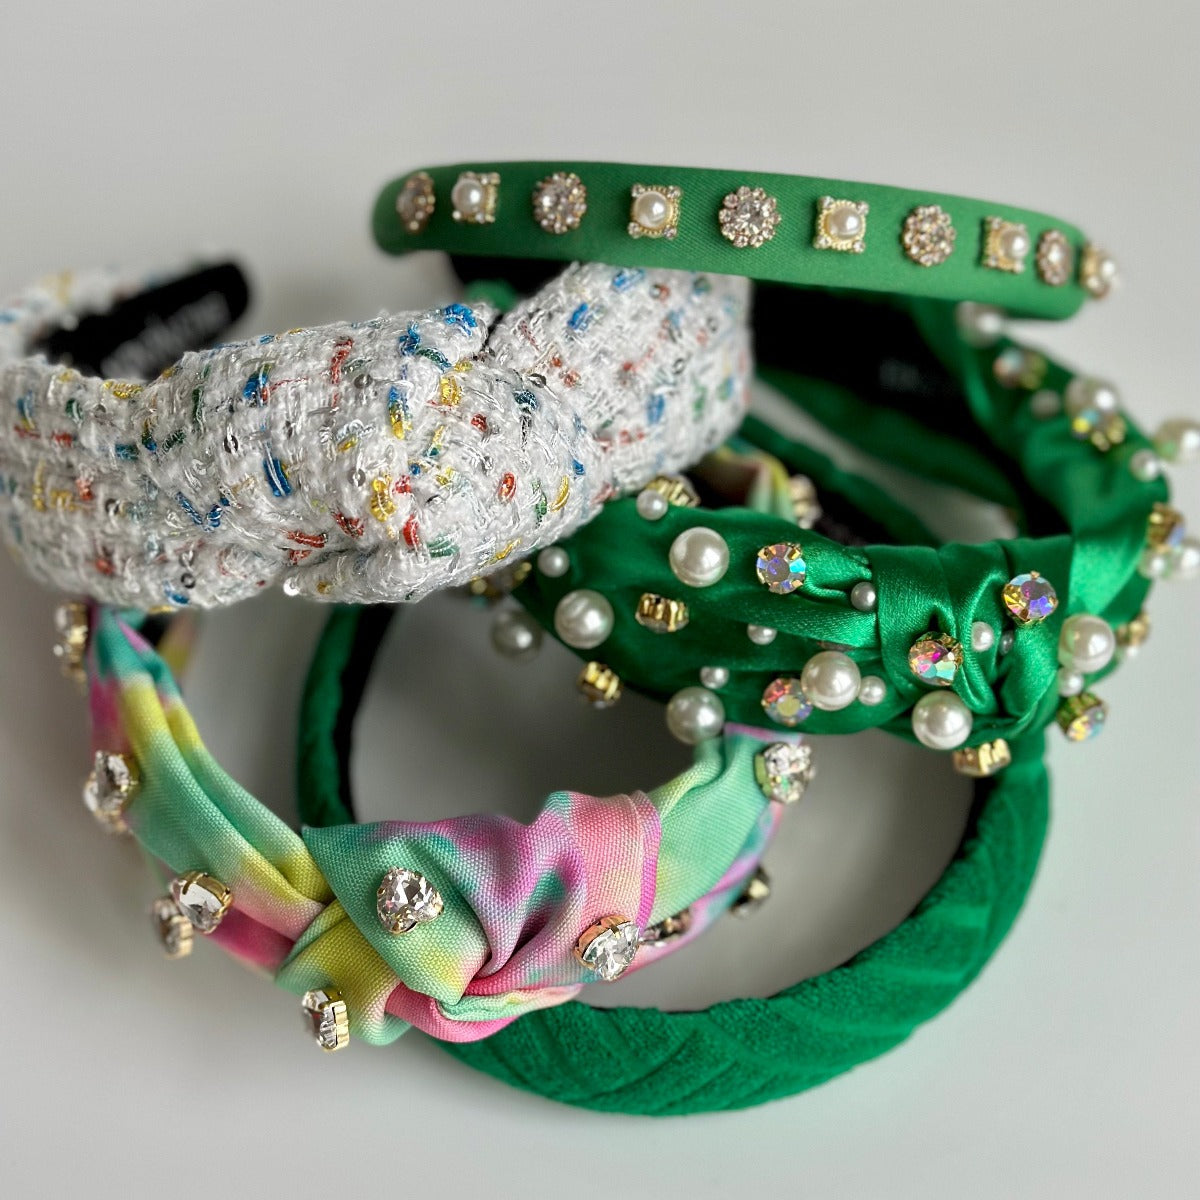 Thin crystal headband - Designer Headband - Spring Headband - Jeweled Headband - Crystal Headband - Womens Headband - Green Headband